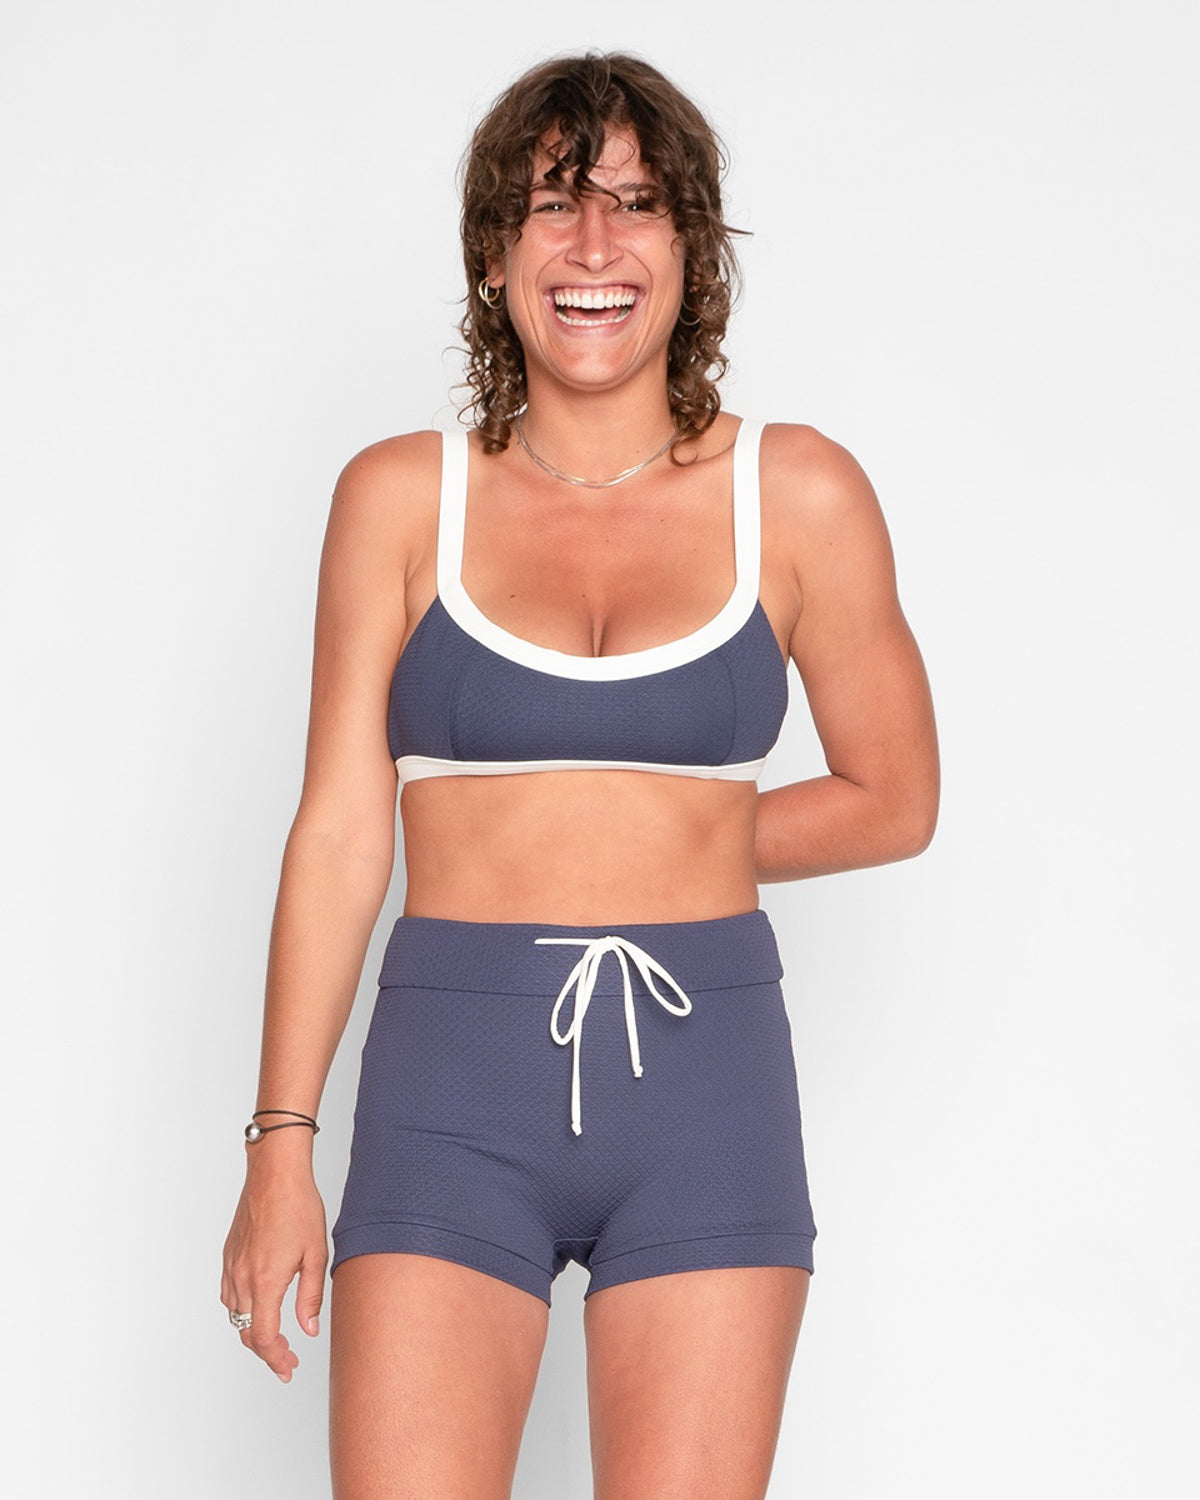 Flor Nautilus Blue White Swim Suit Bikini Top Adjustable Straps